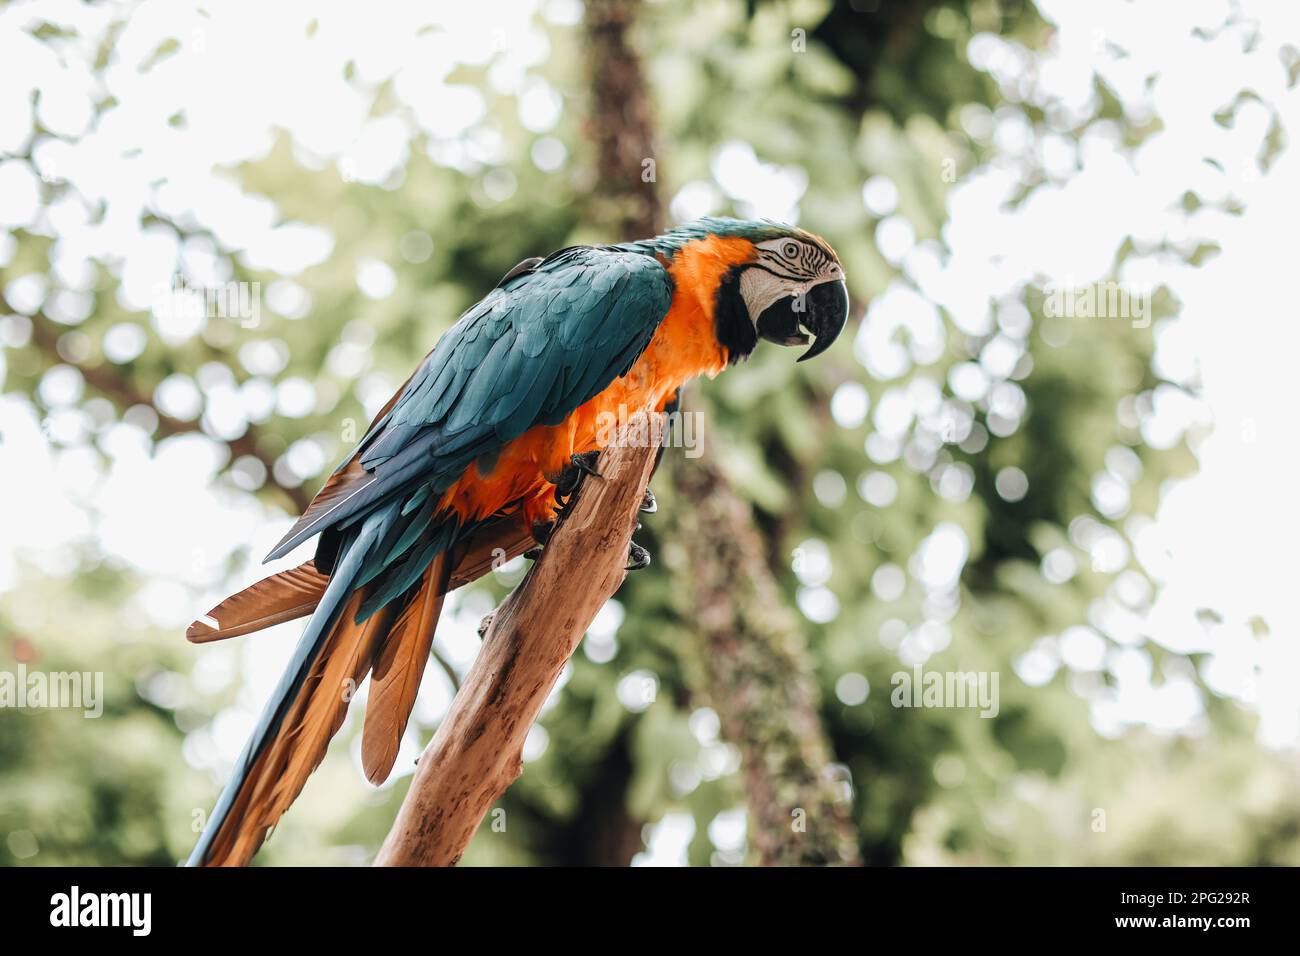 Orange blue cockatoo exotic parrot in the bird park. Wildlife scene in tropic forest. Stock Photo